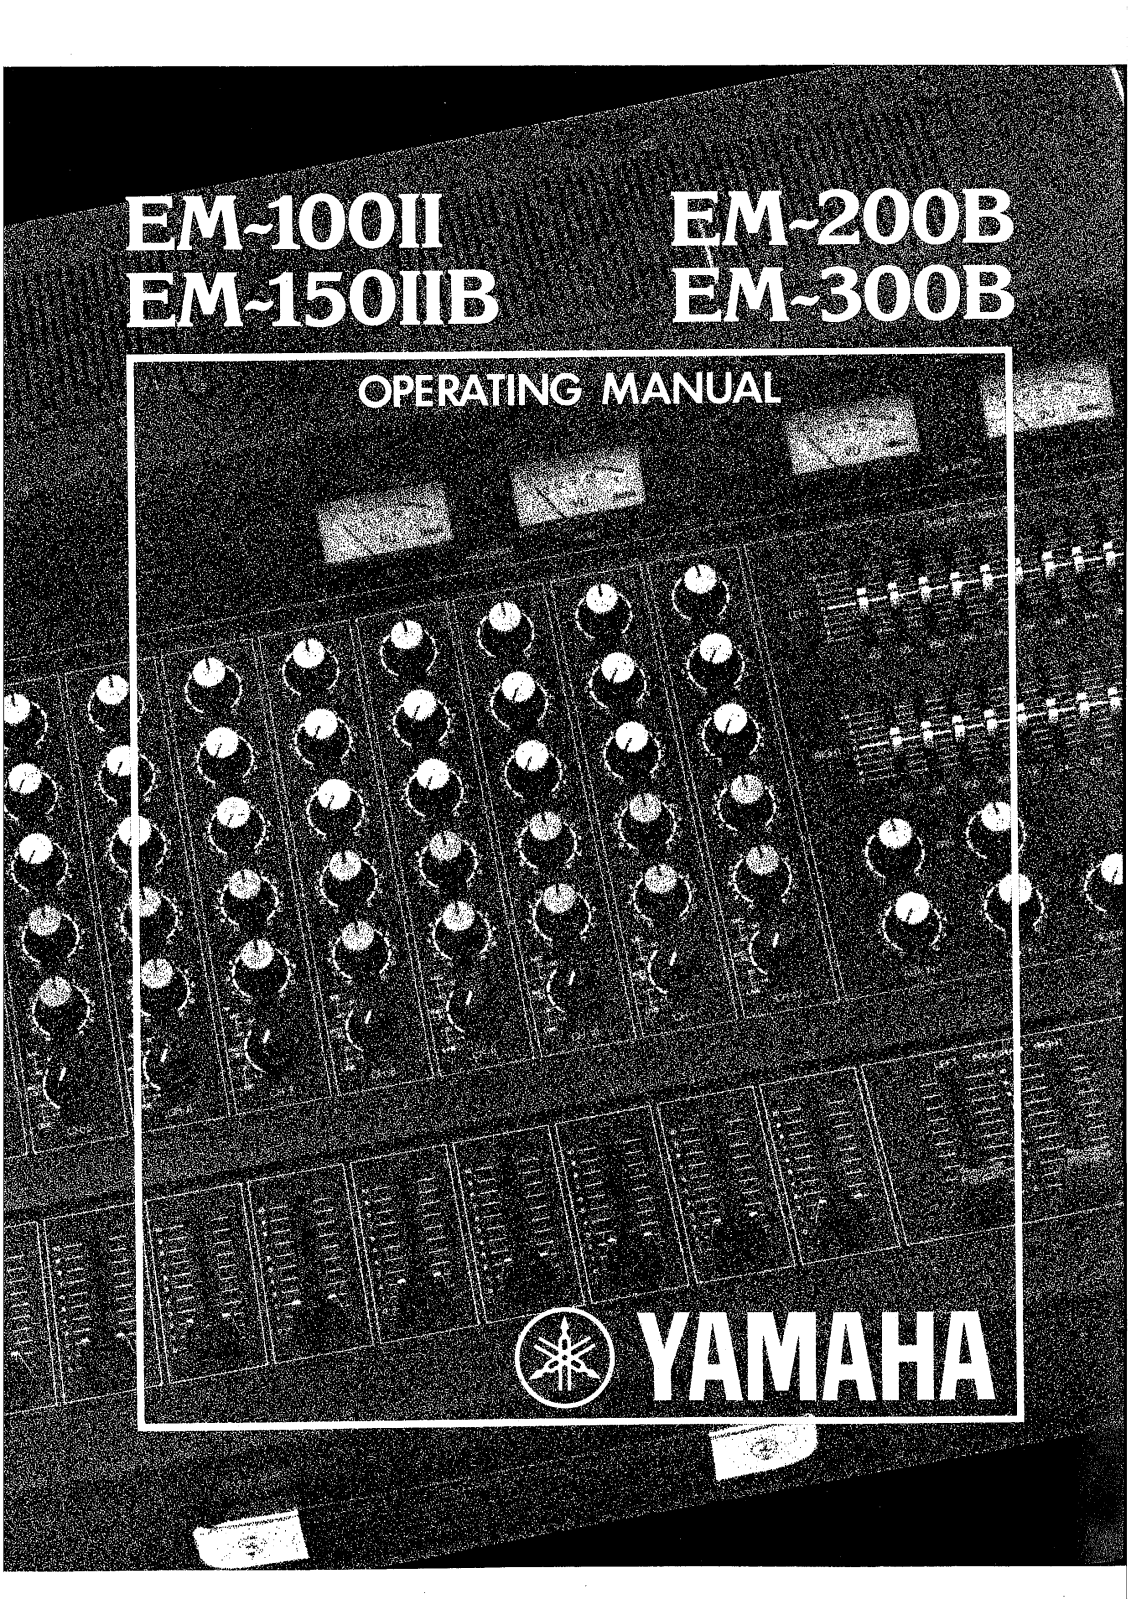 Yamaha EM-100II, EM-150IIB, EM-200B, EM-300B Manual